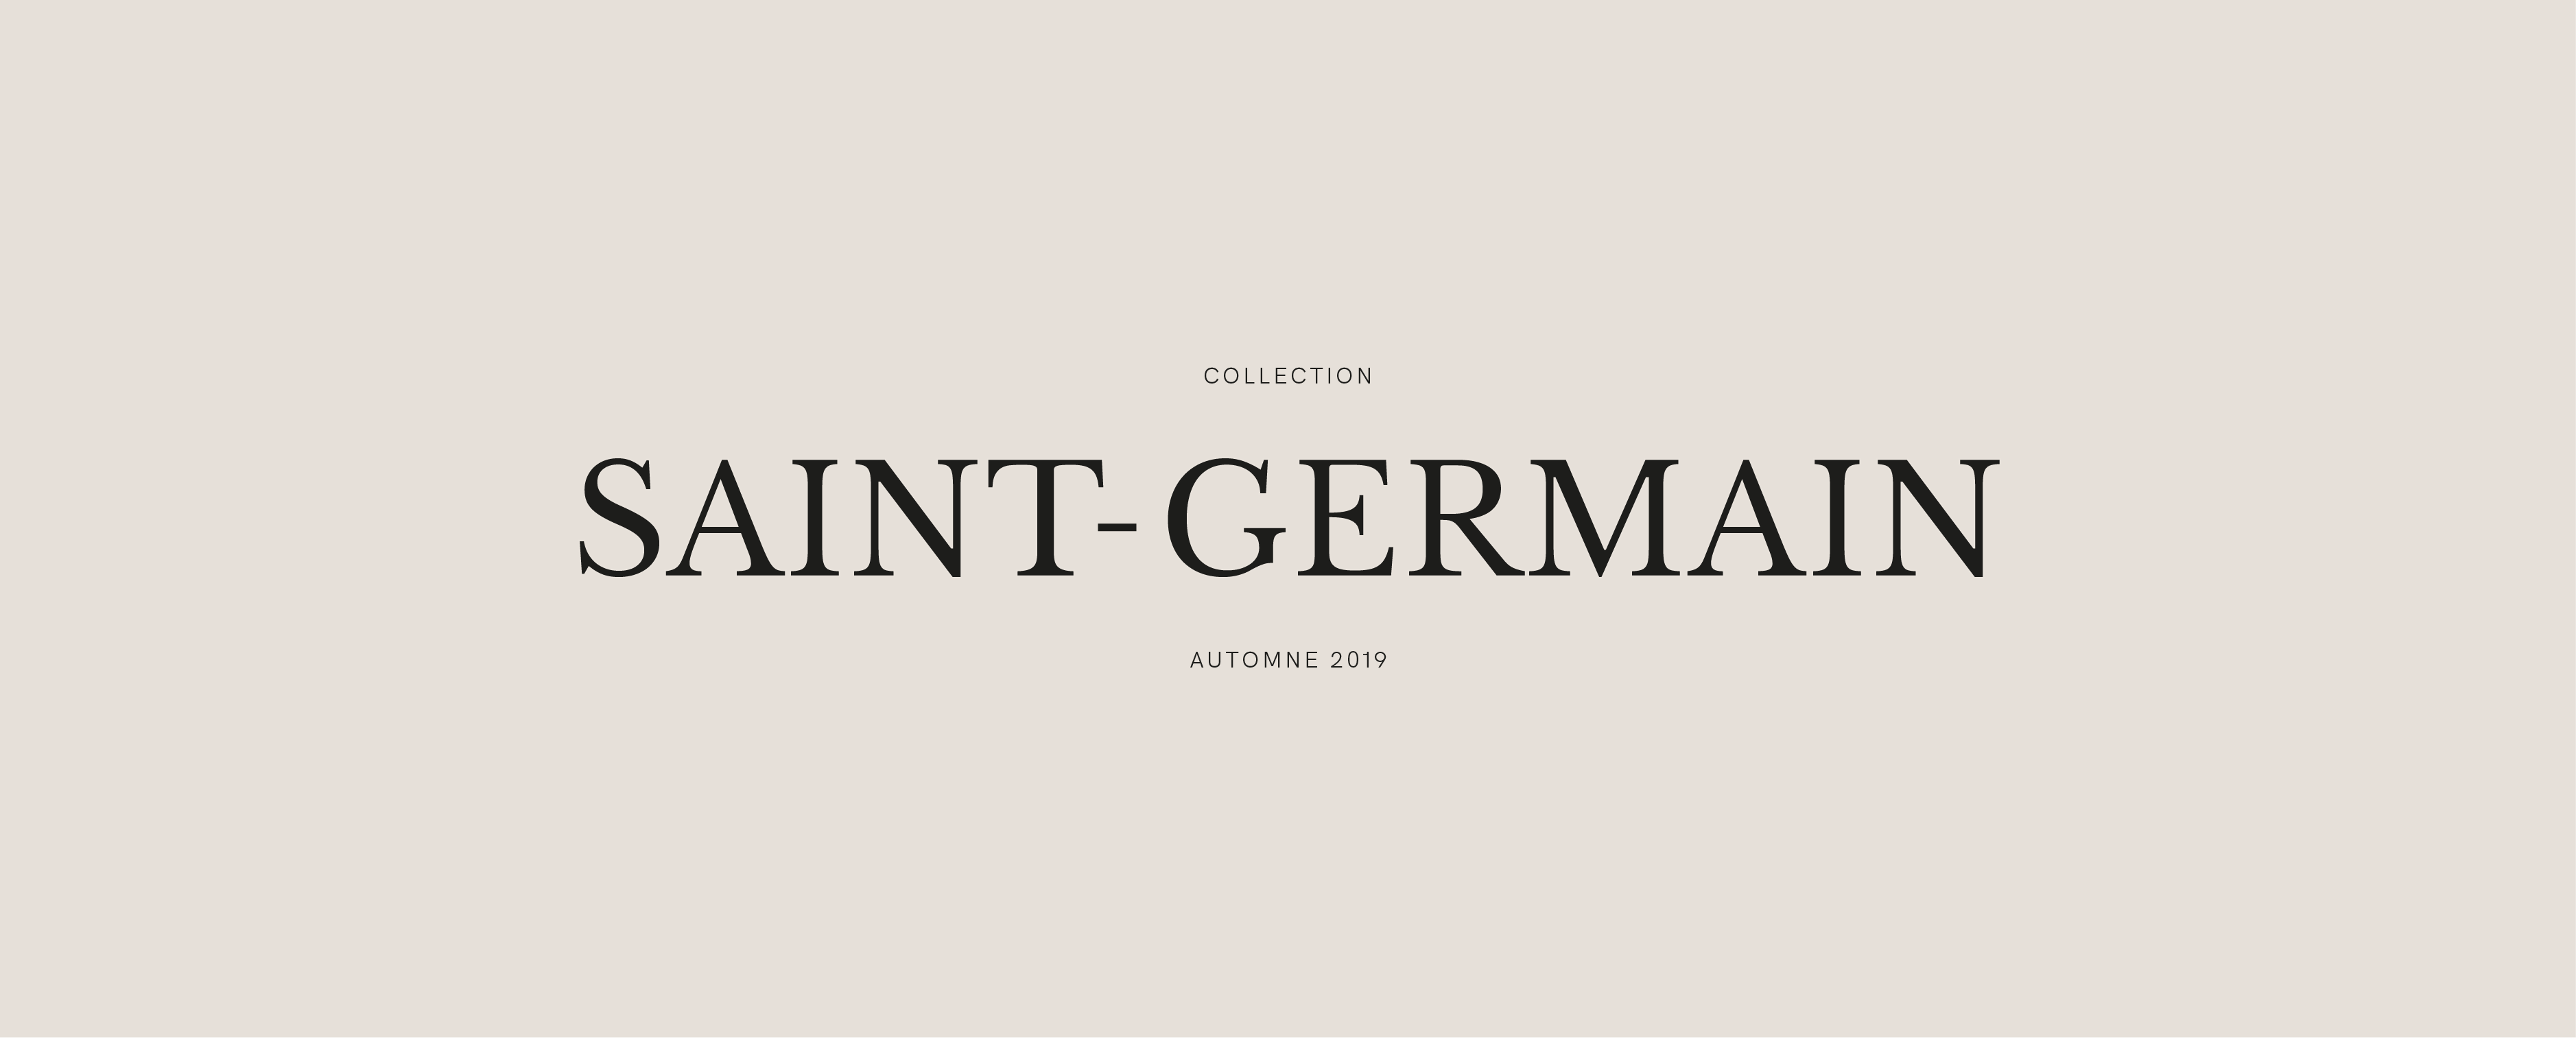 Alinea collection automne Saint Germain